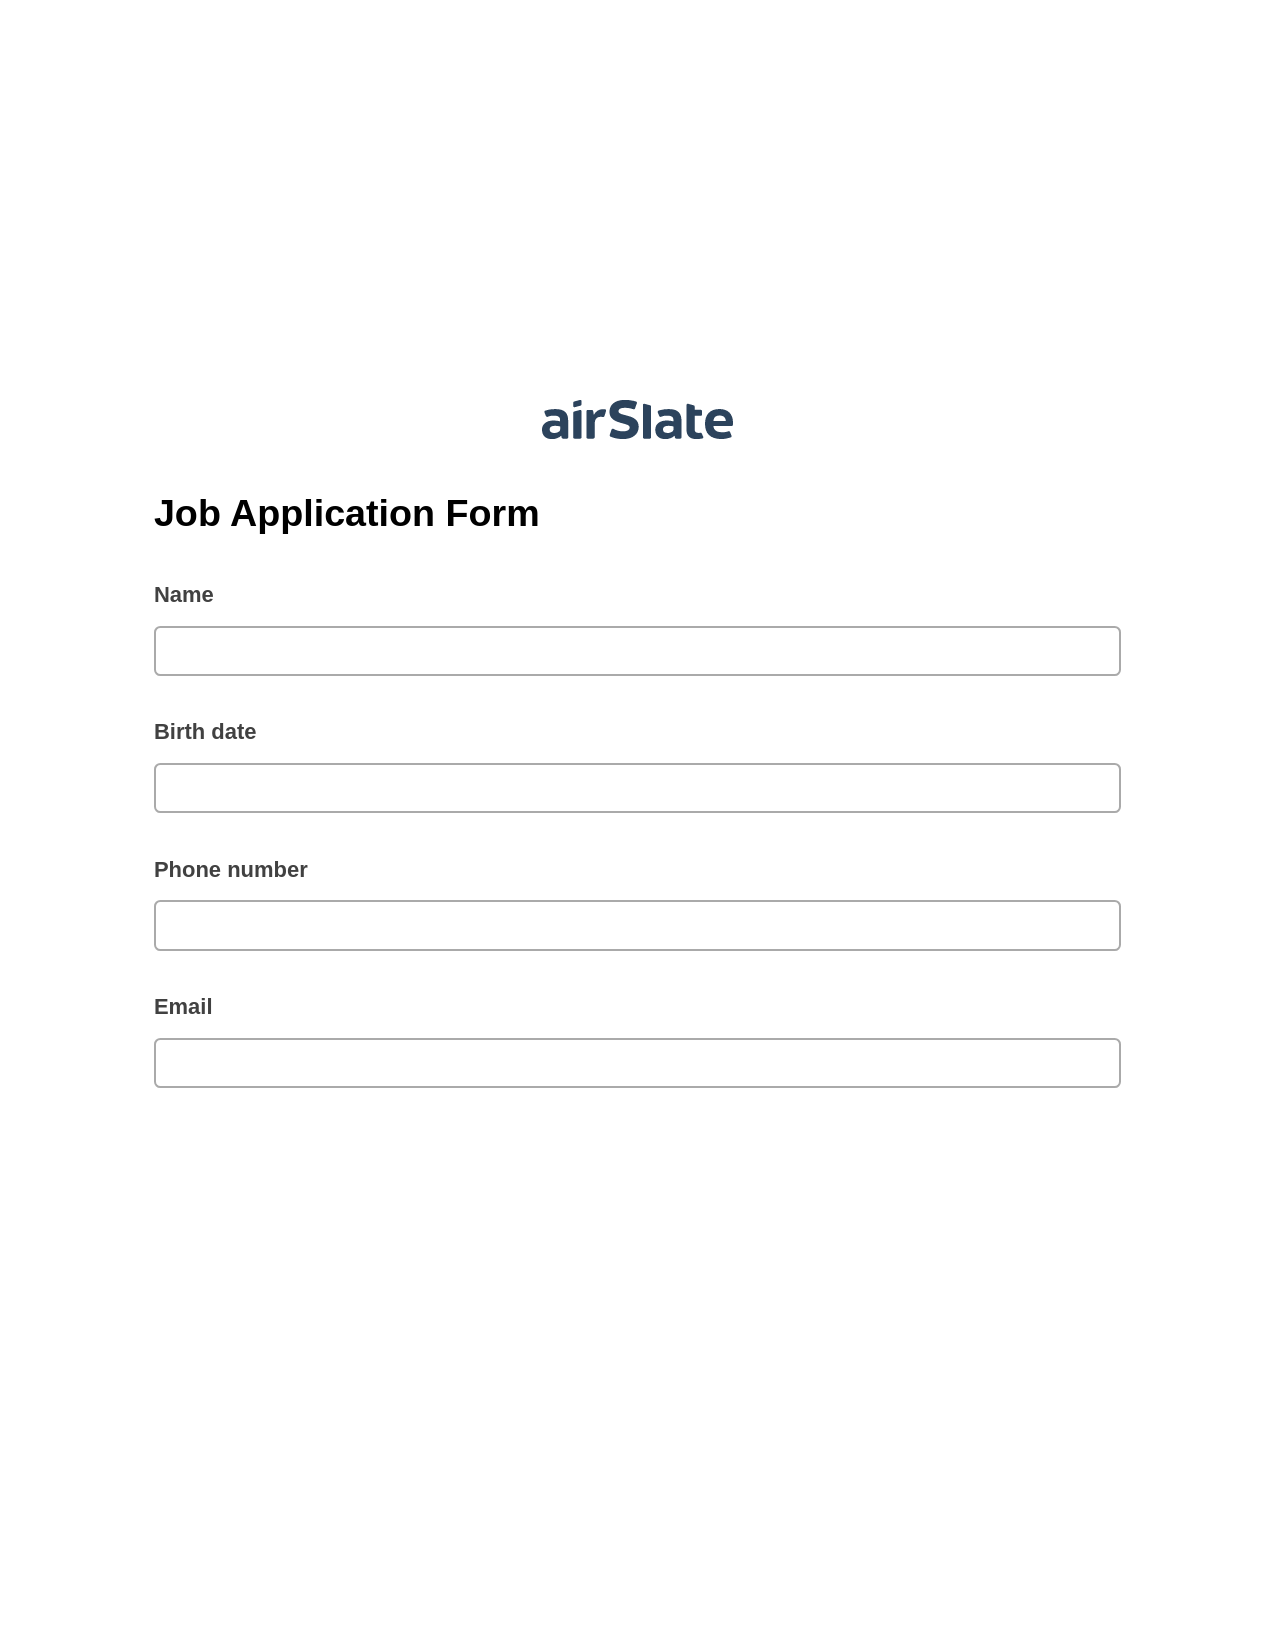 Job Application Form Pre-fill from Google Sheets Bot, Lock the slate bot, Webhook Postfinish Bot